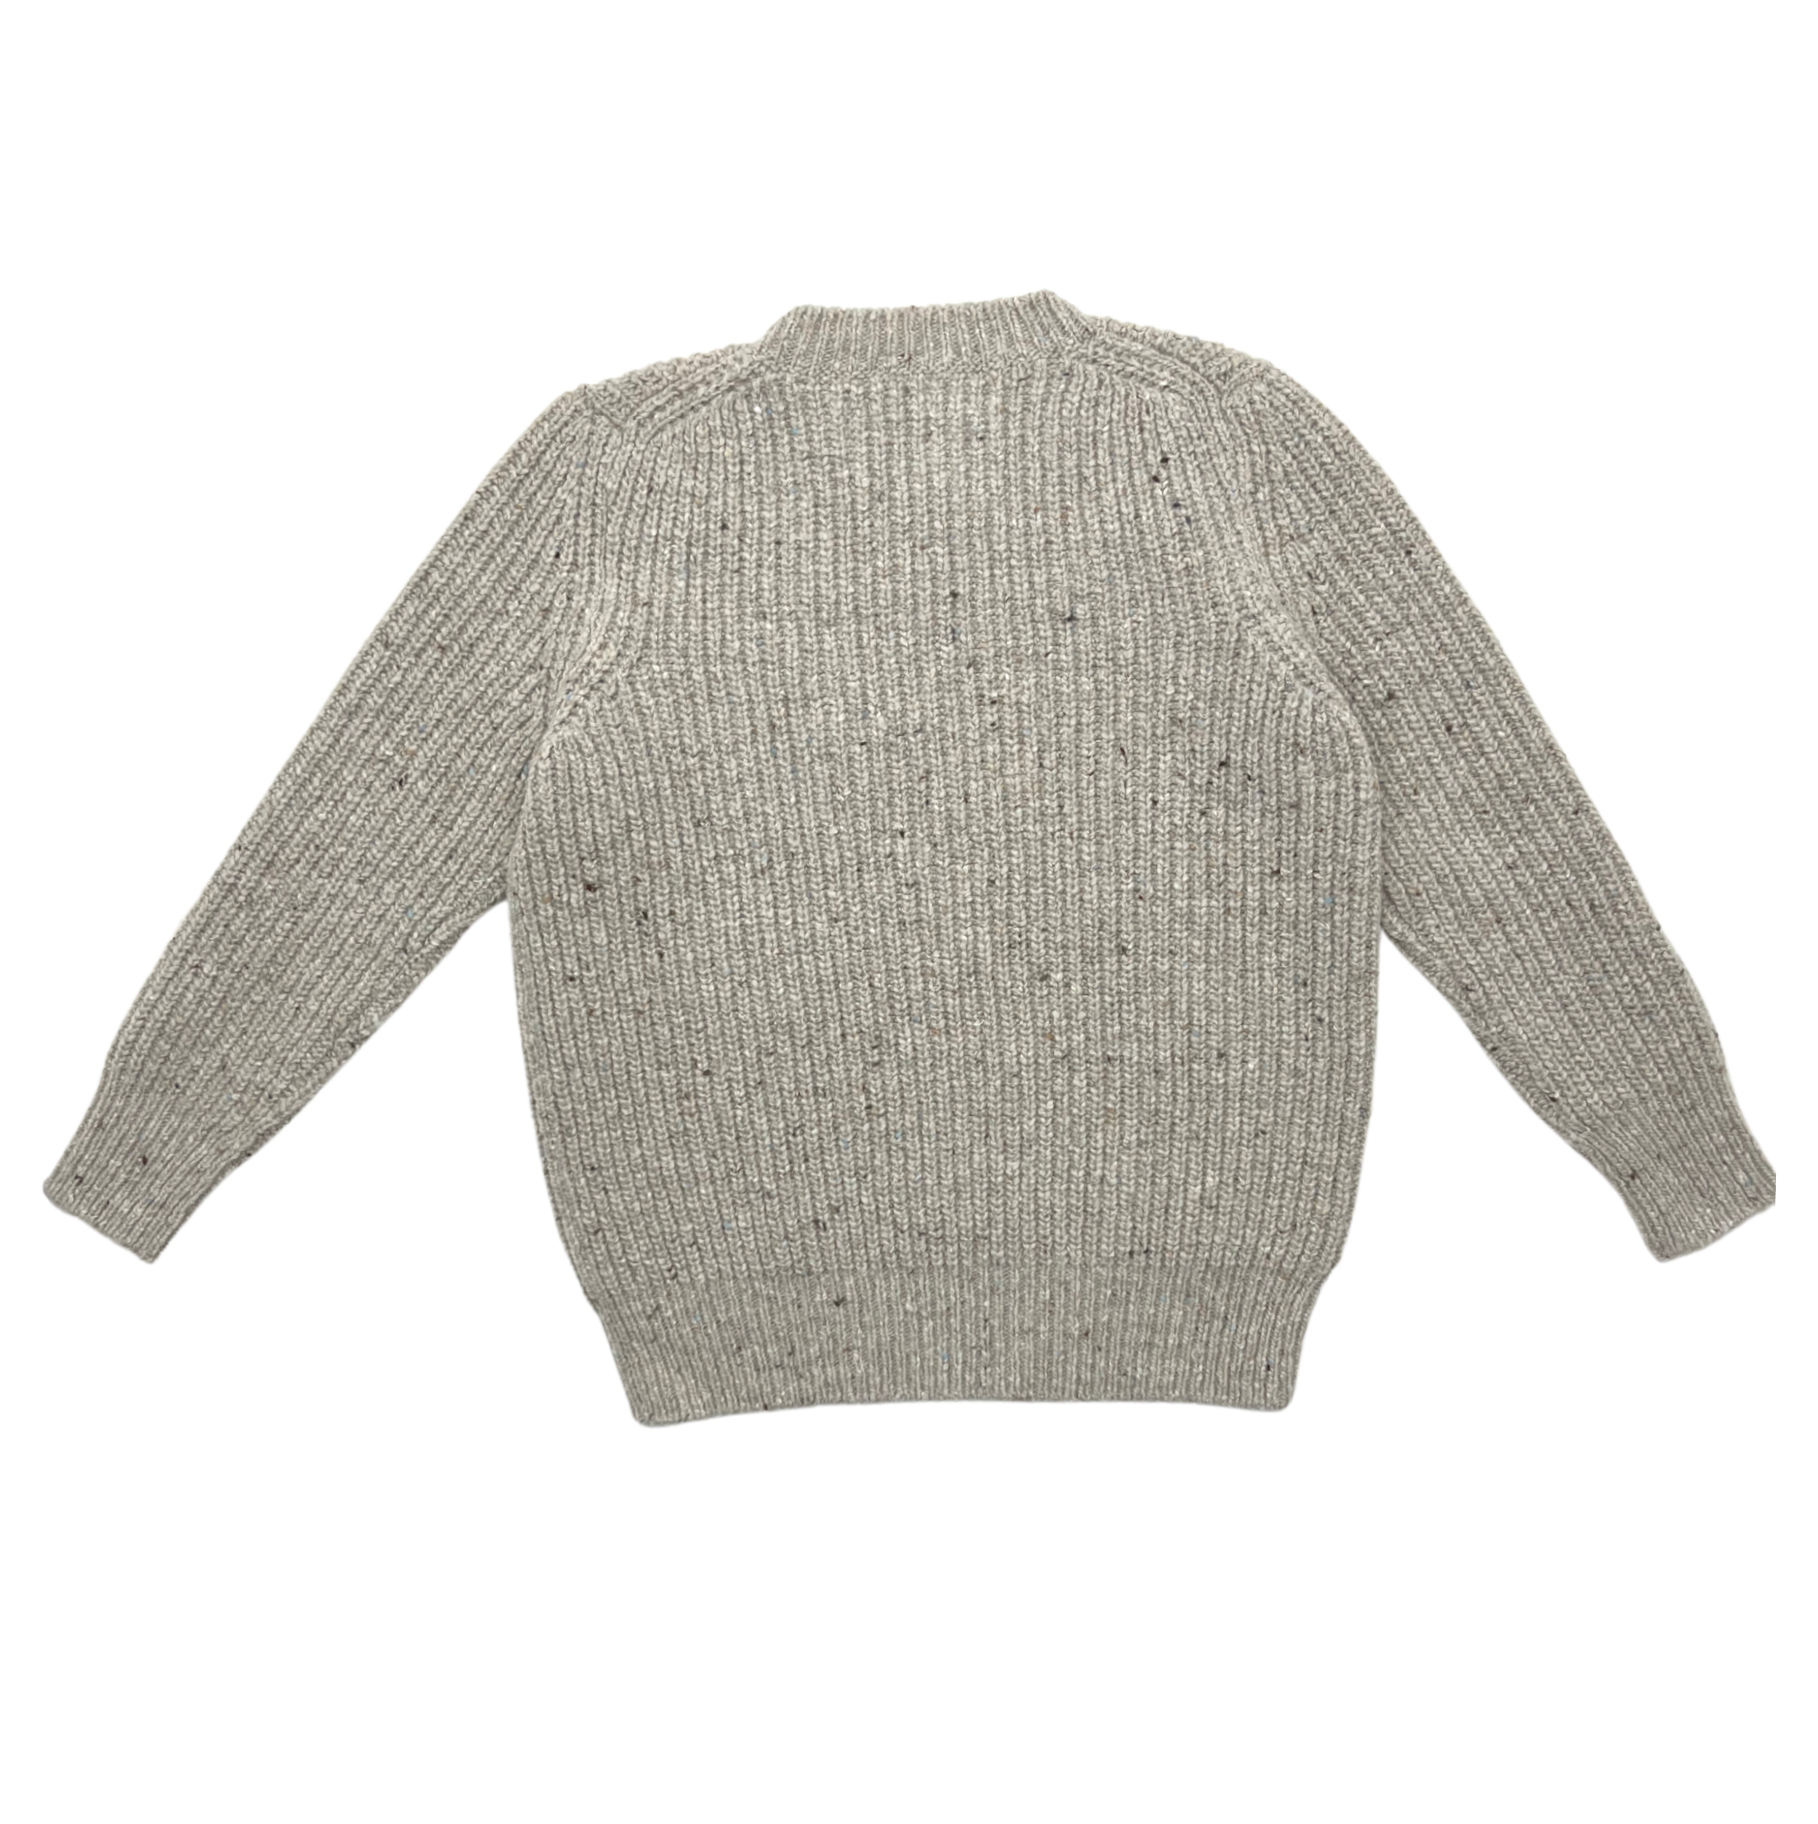 ALANUI - Mushroom embroidered wool sweater - 4 years old